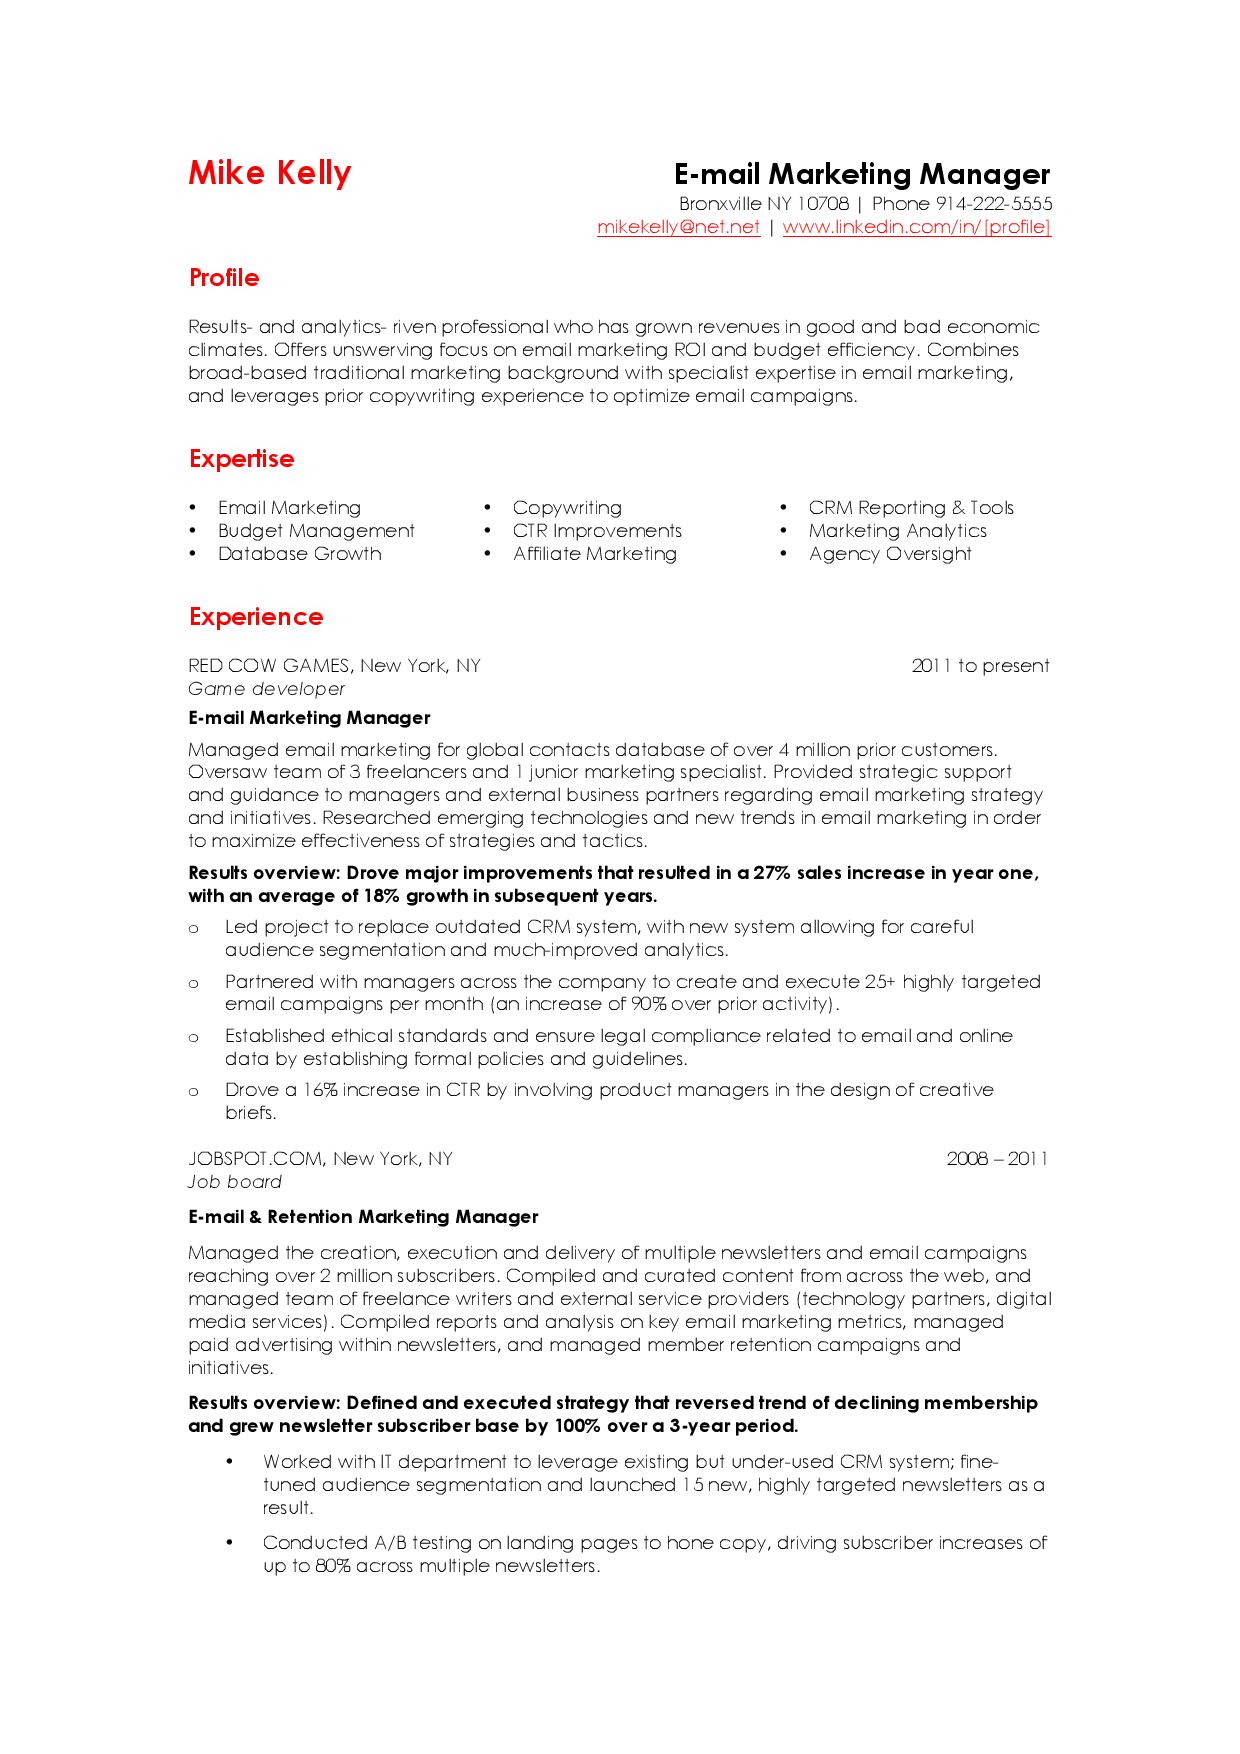 Email marketing resume sample